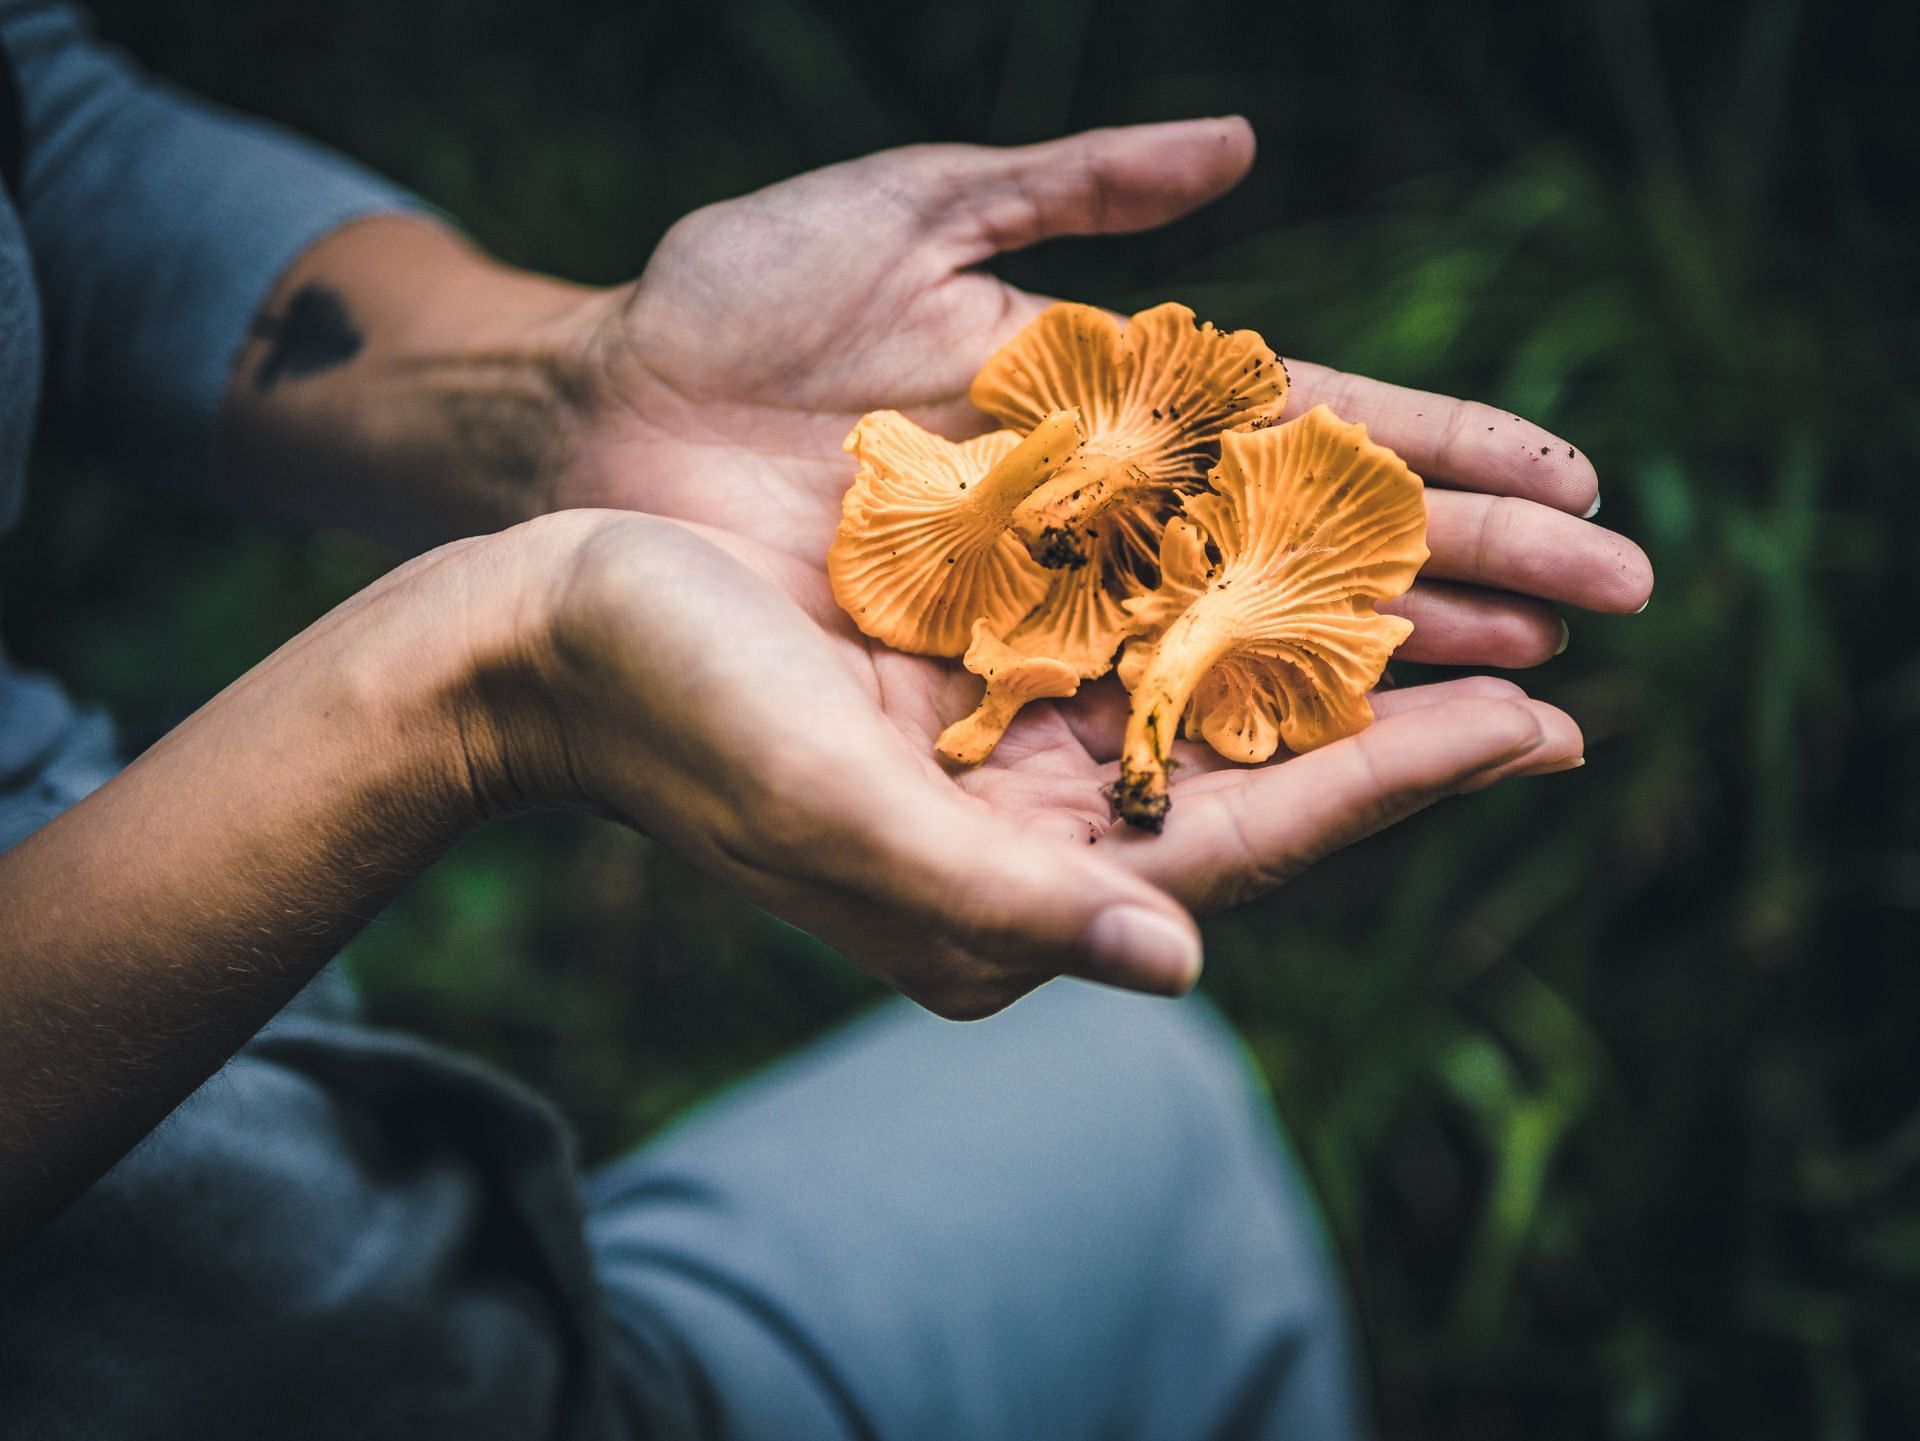 Potential benefits of tremella mushrooms (Image via Pexels / Fabian Wiktor)